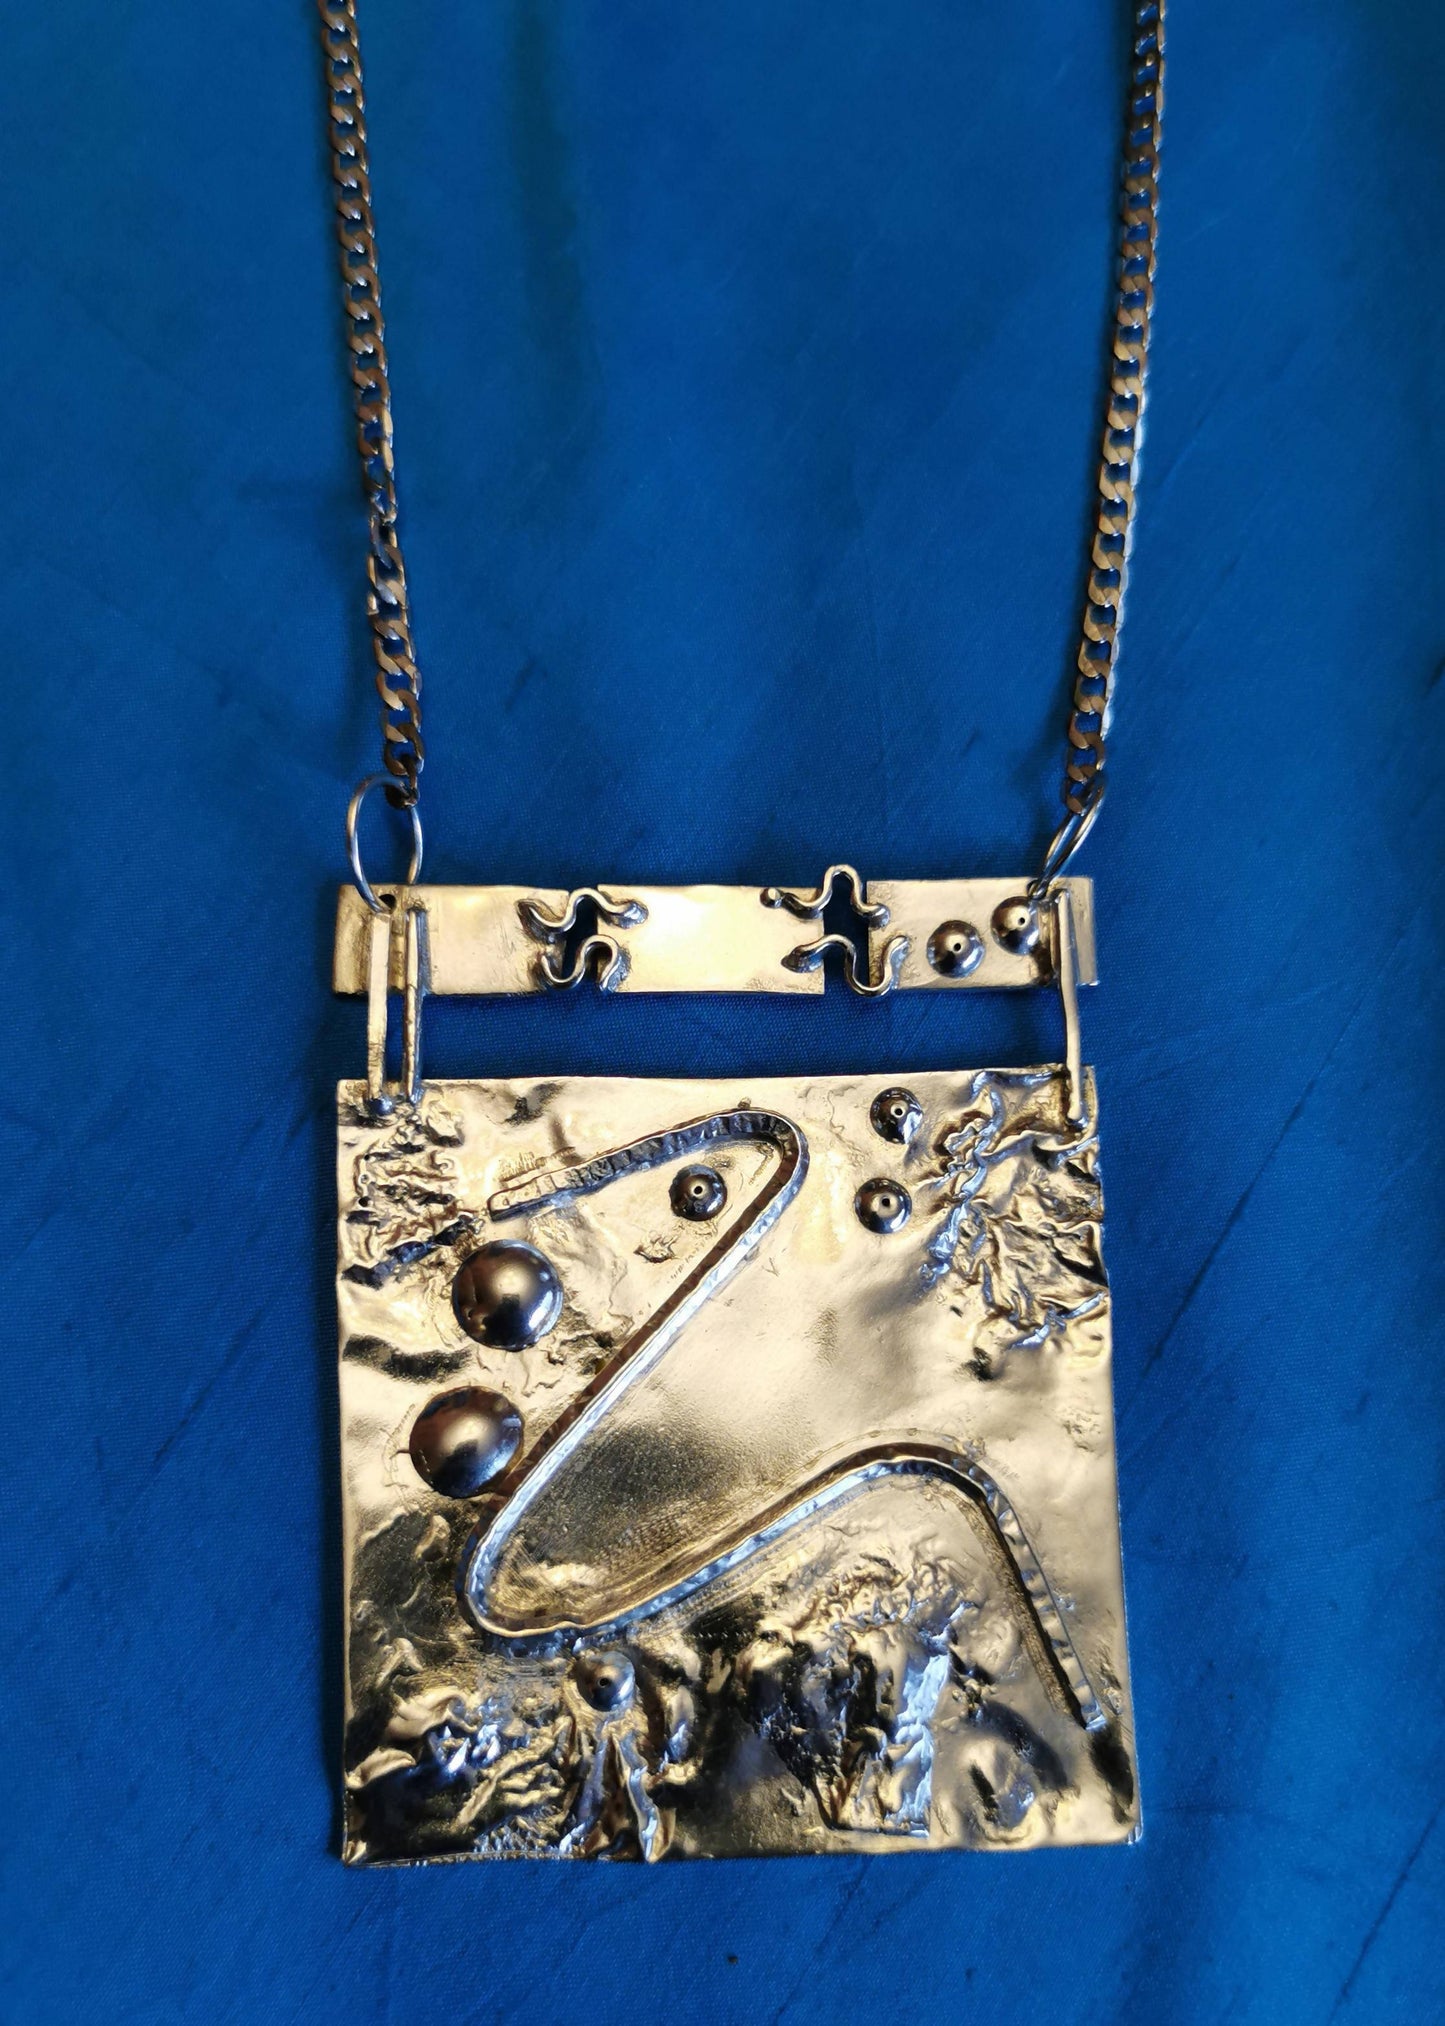 Large solid silver rectangular pendant